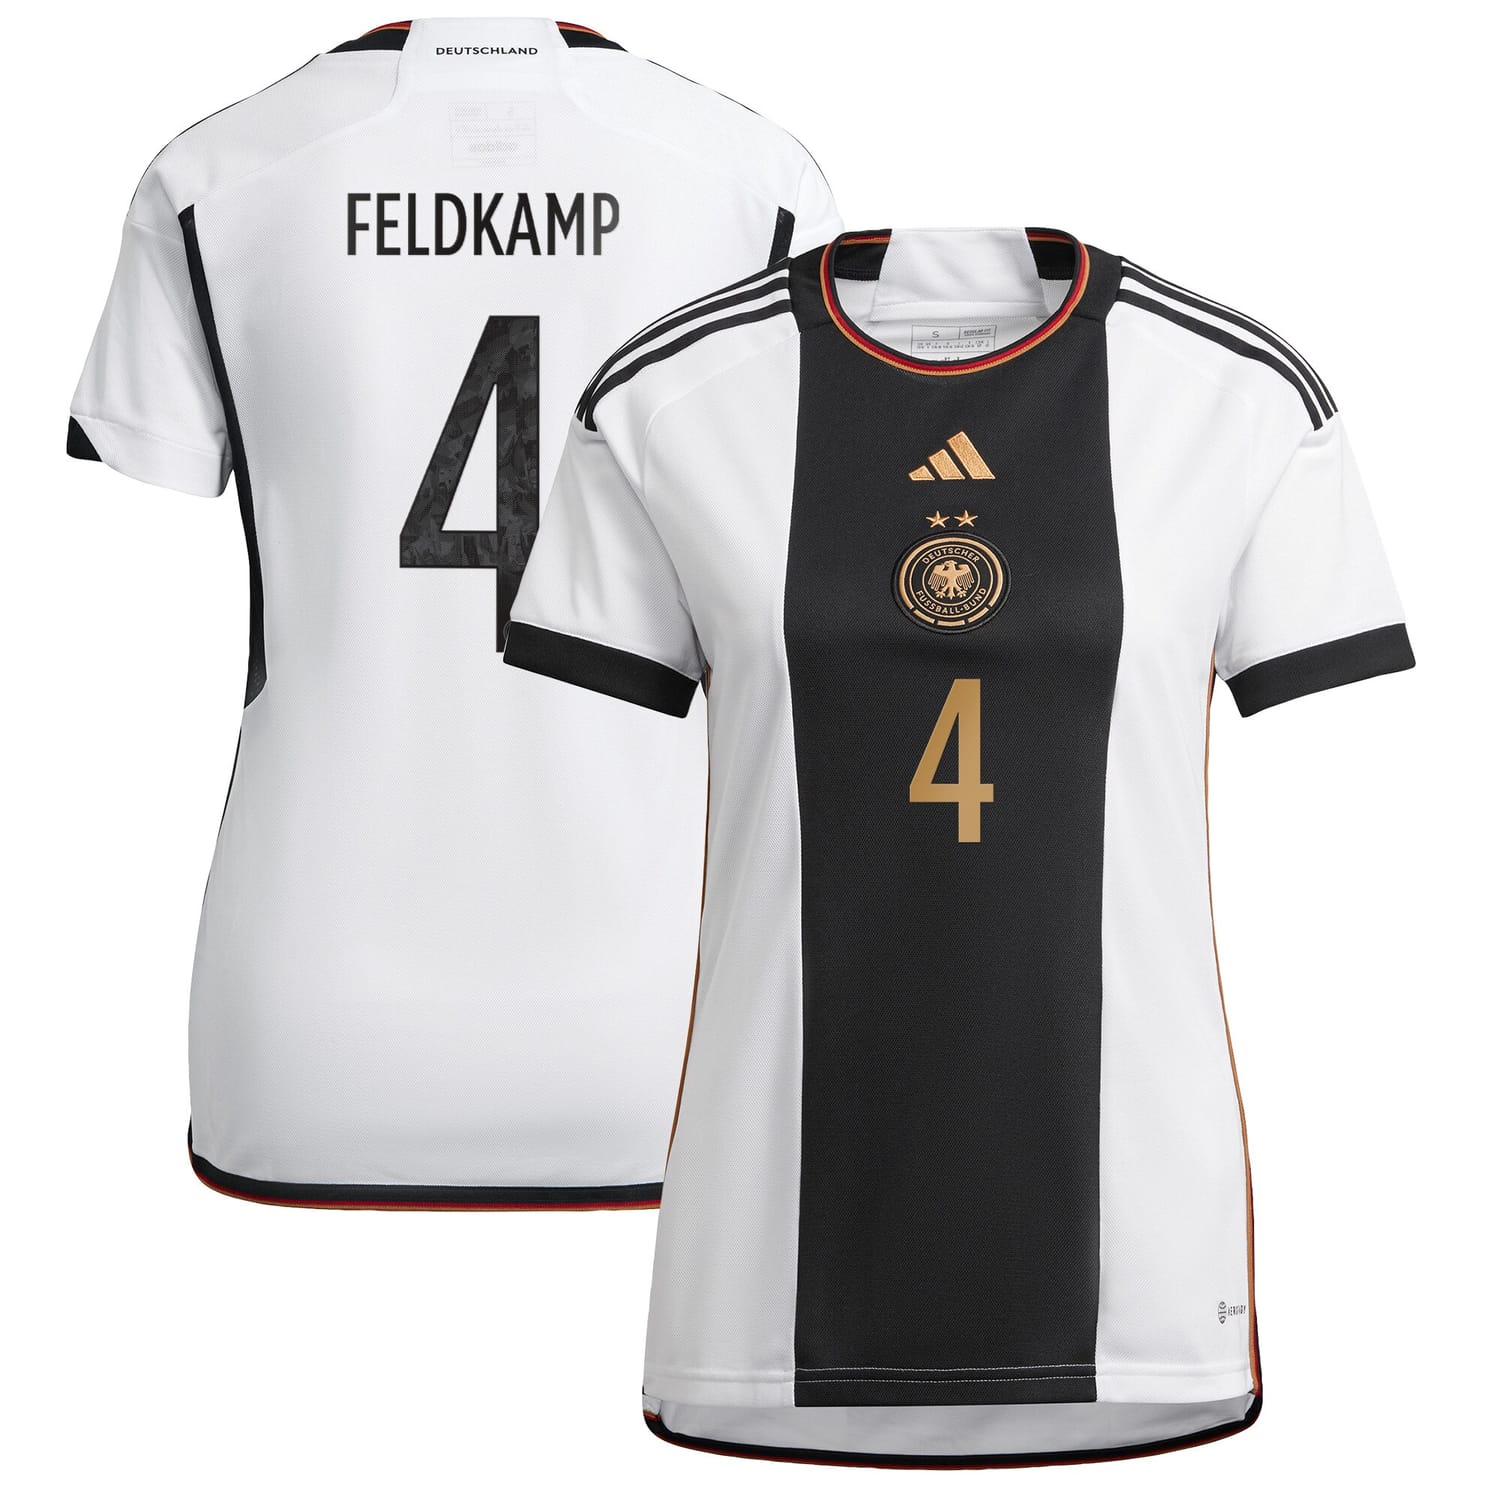 Germany National Team Home Jersey Shirt player Jana Feldkamp 4 printing for Women